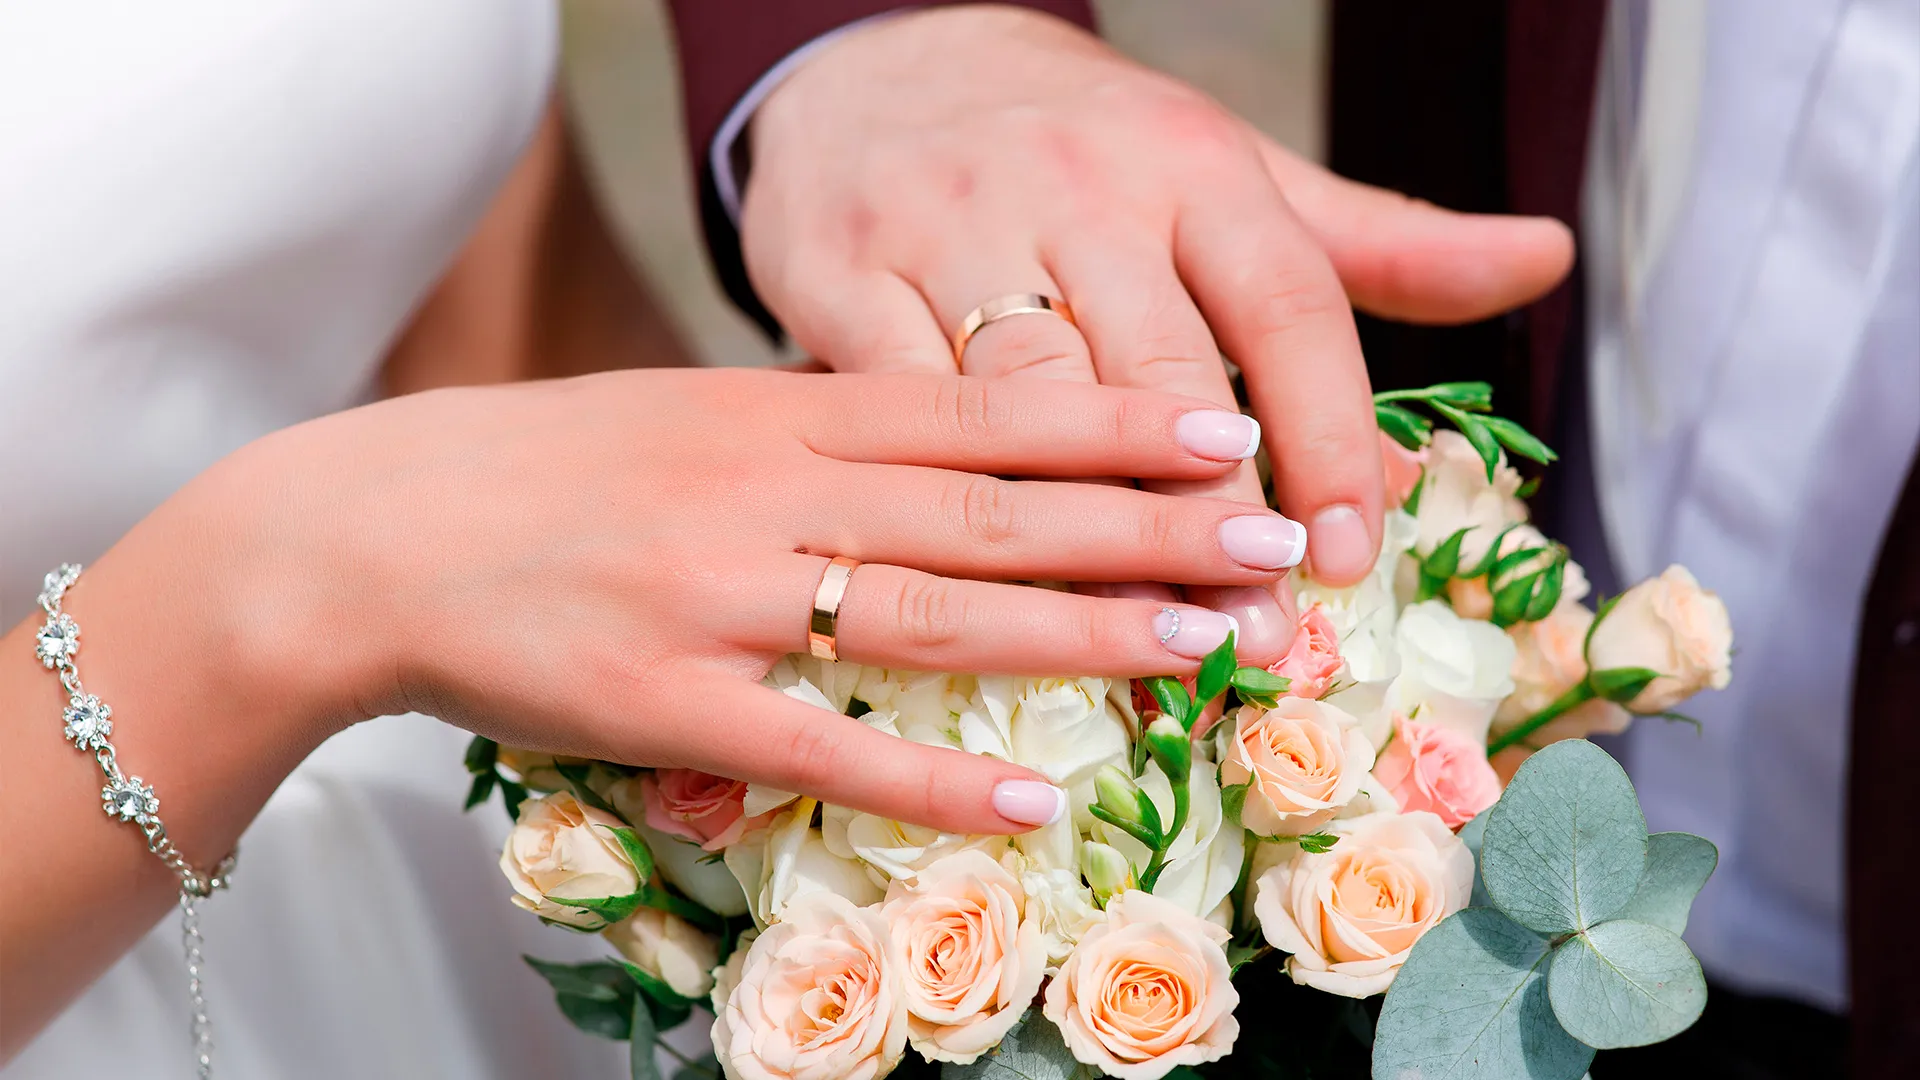 Фото: Wedding decor / Shutterstock.com